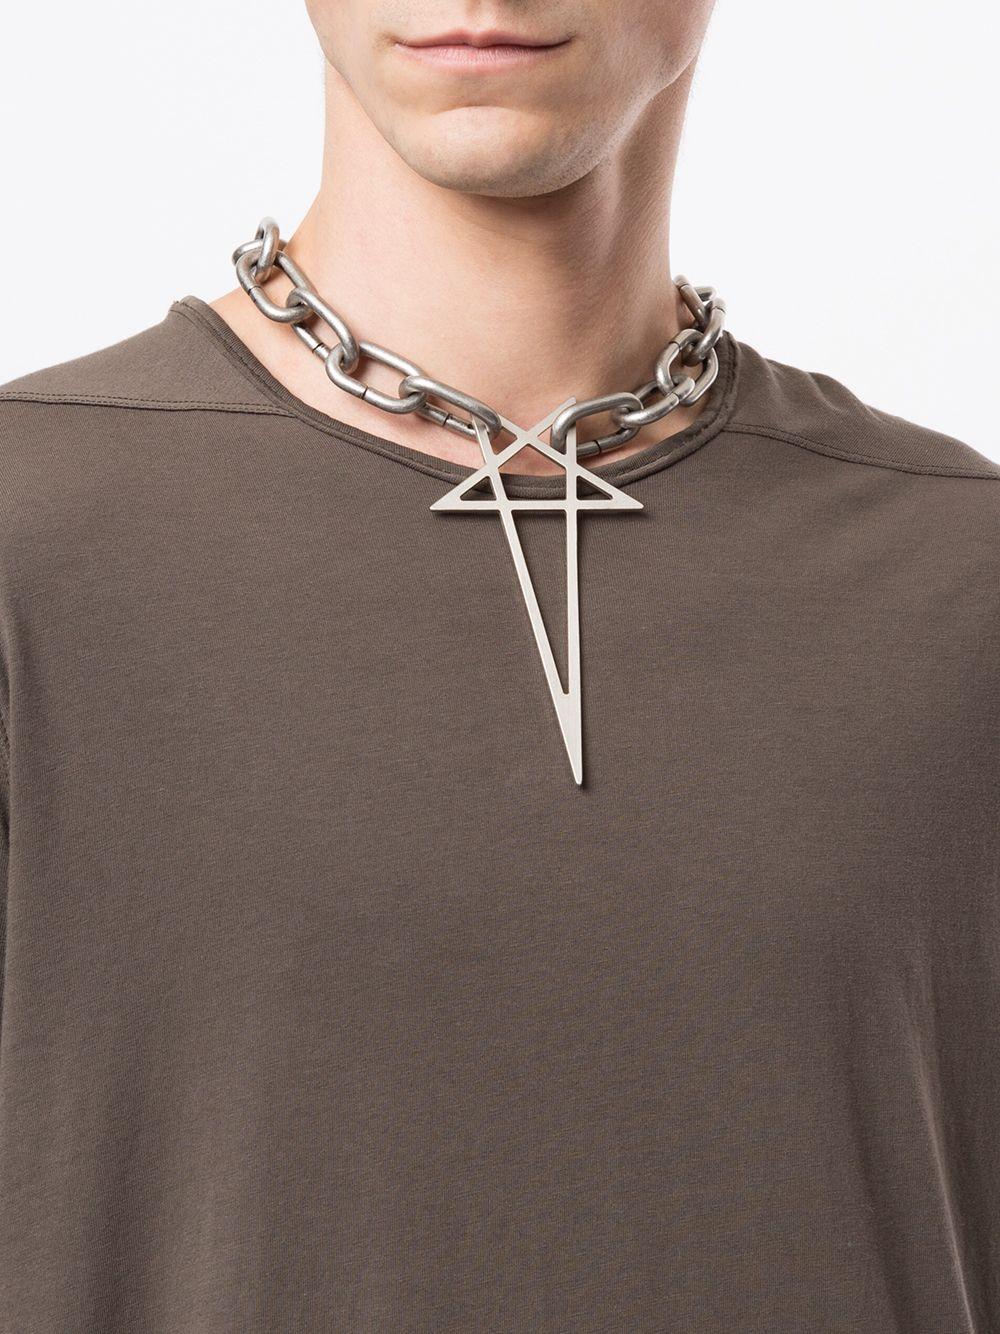 Rick Owens Pentagram Pendant Necklace in Metallic | Lyst